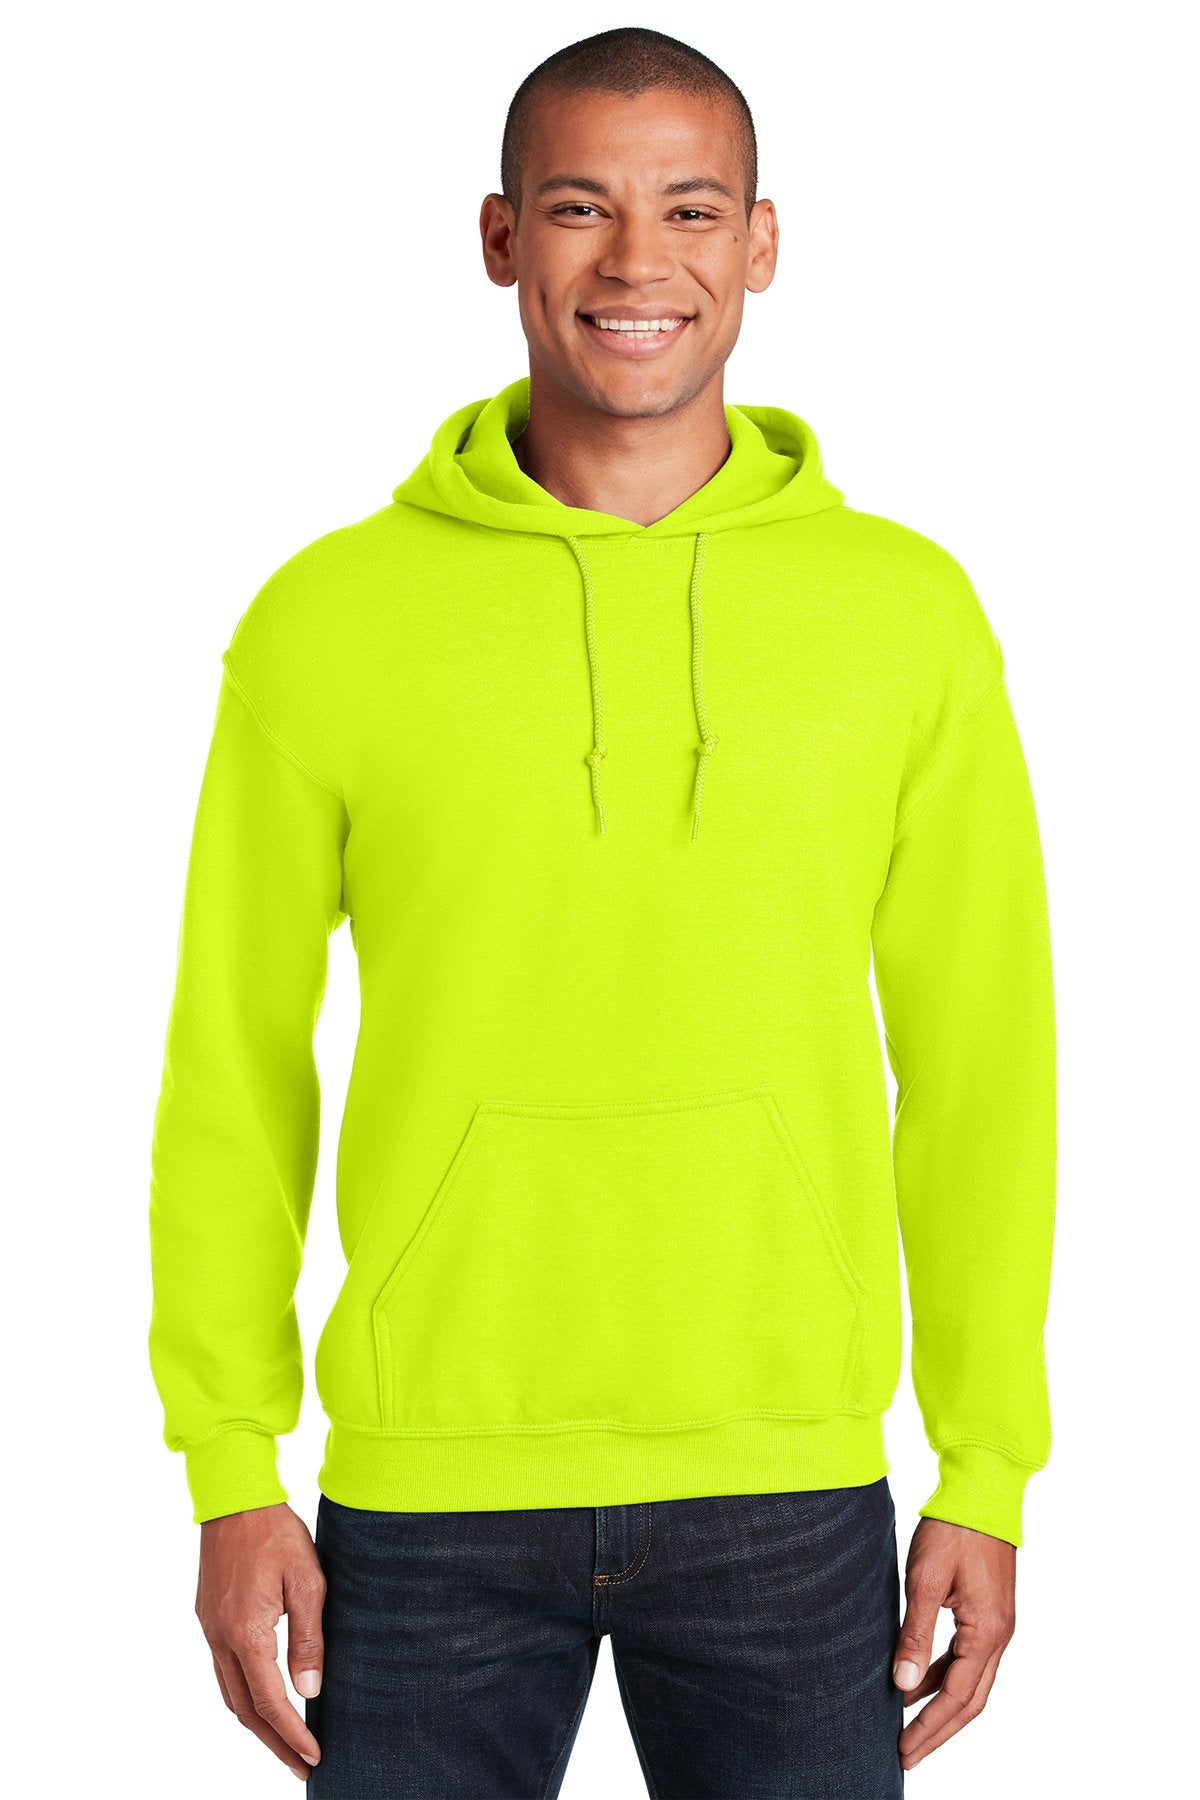 Gildan Safety Green 18500 custom embroidery sweatshirts